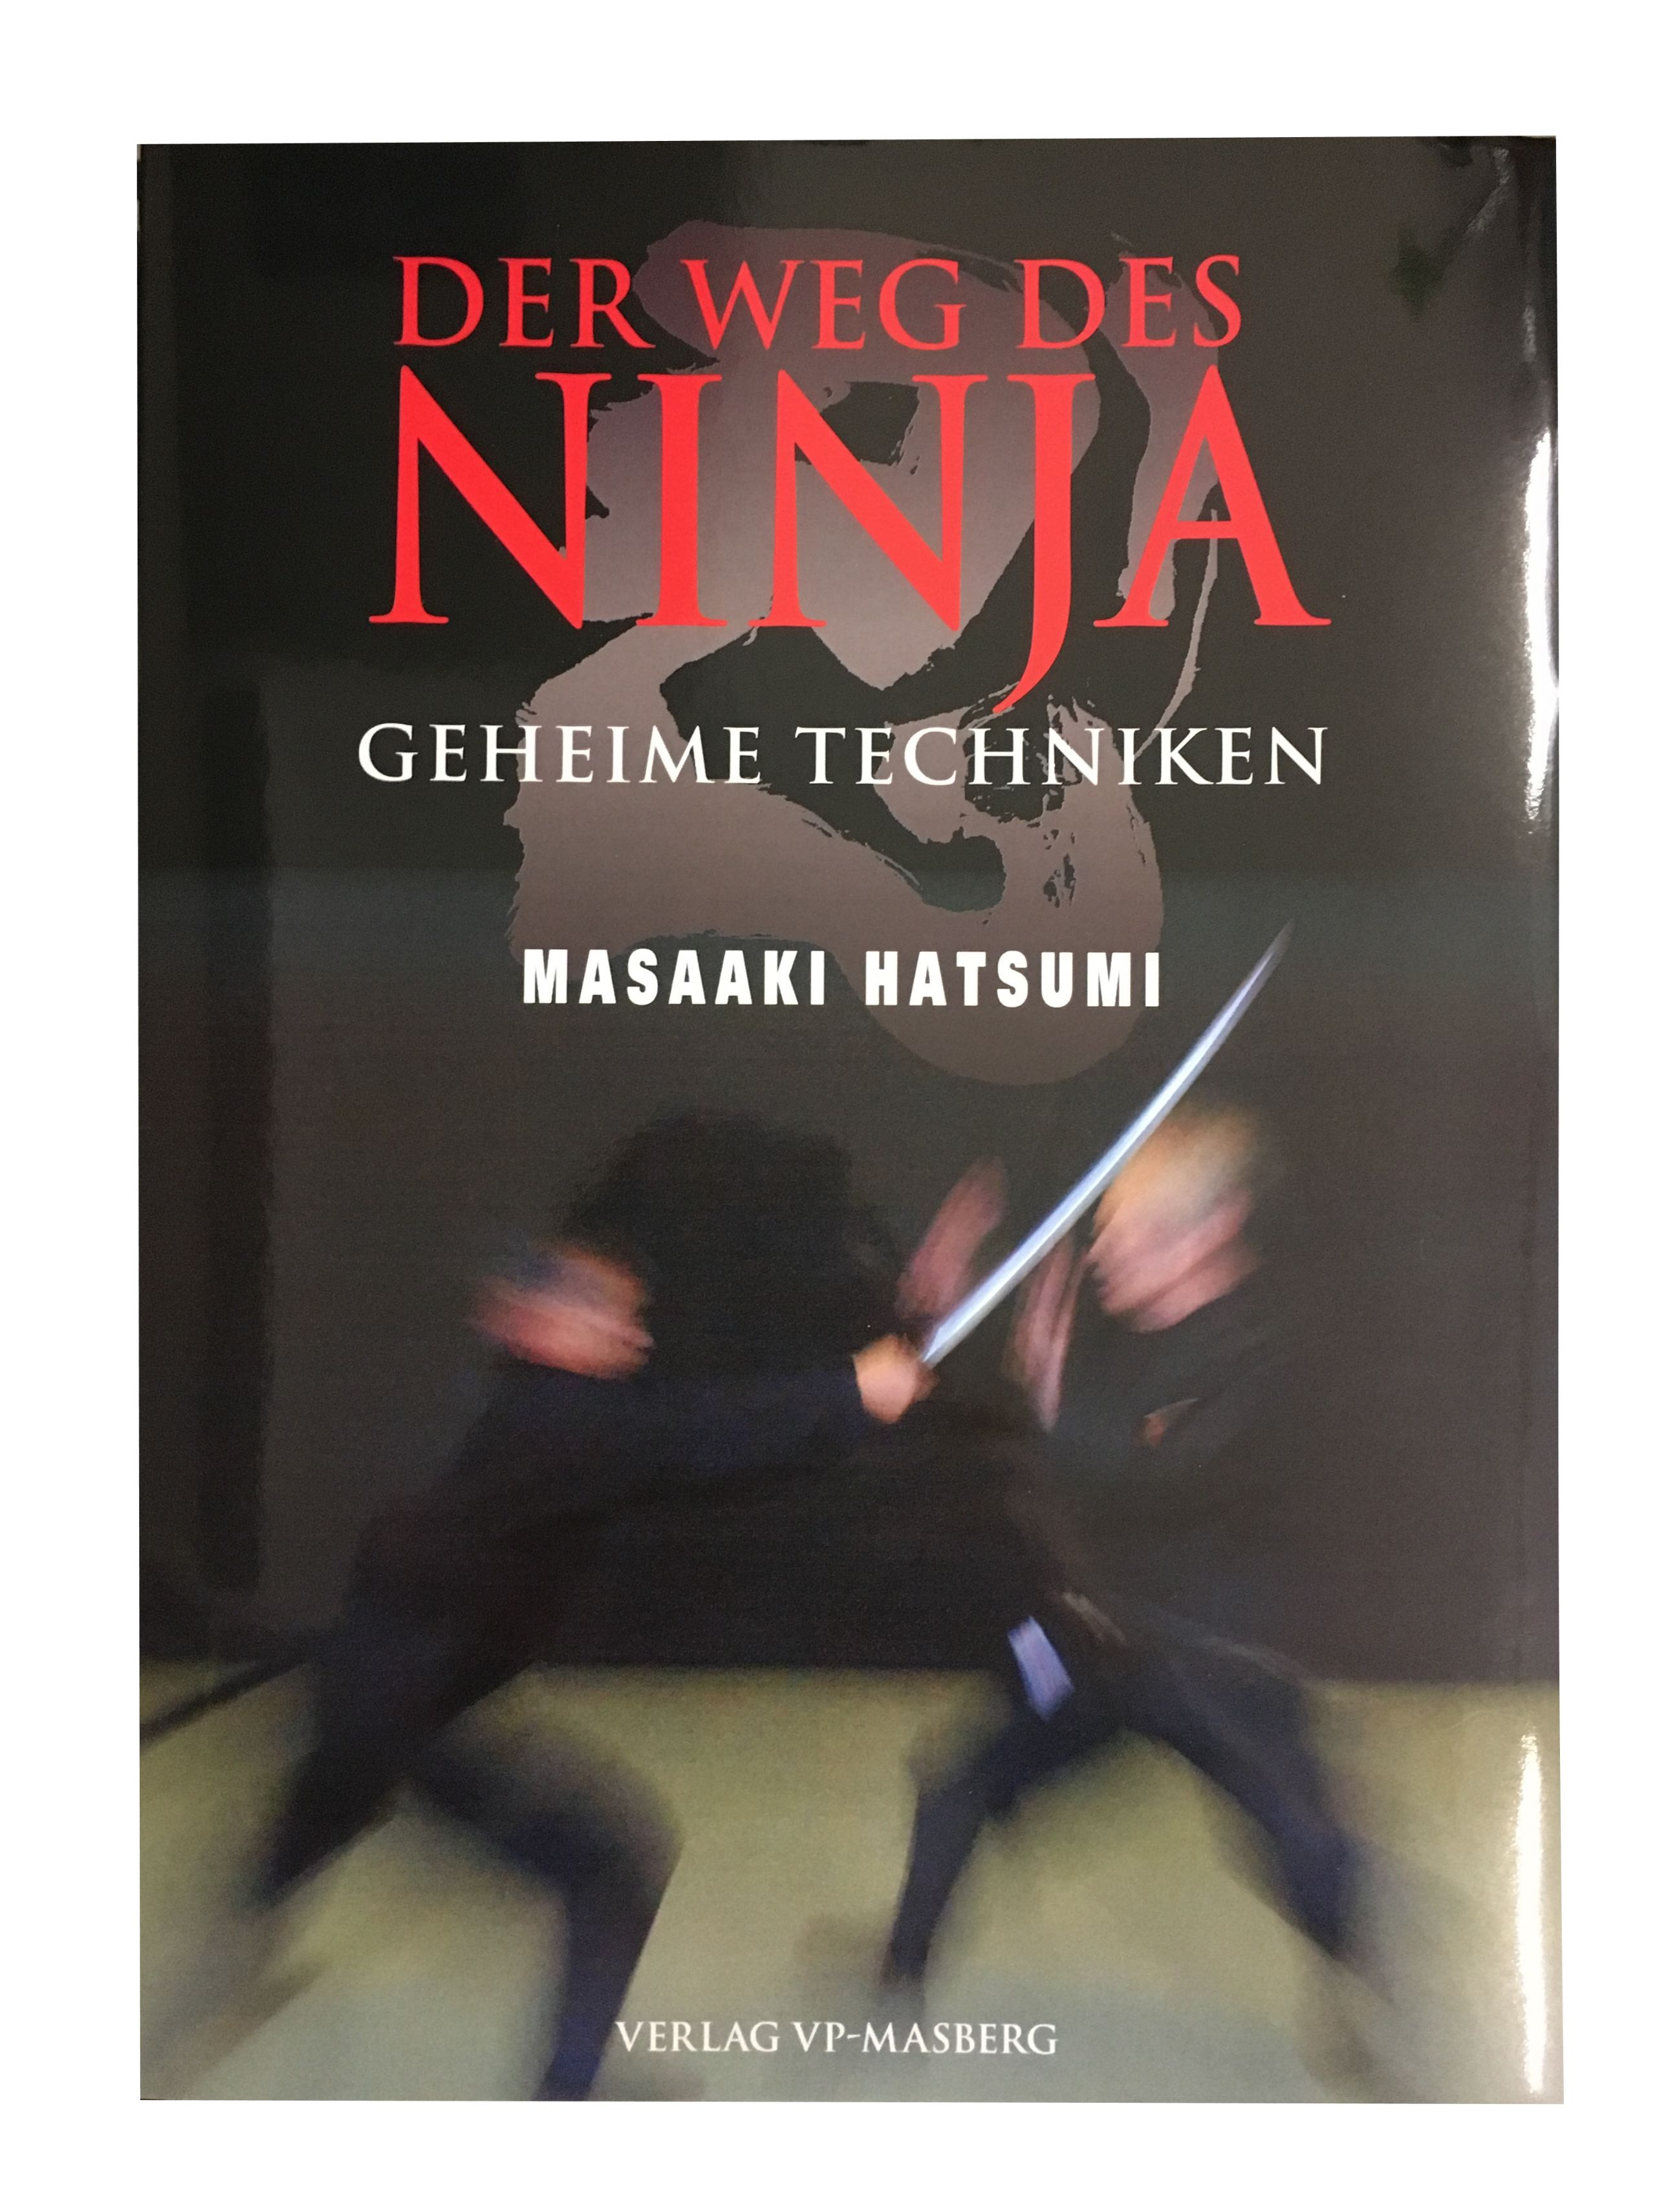 Der Weg des Ninja - Geheime Techniken (Masaki Hatsumi)